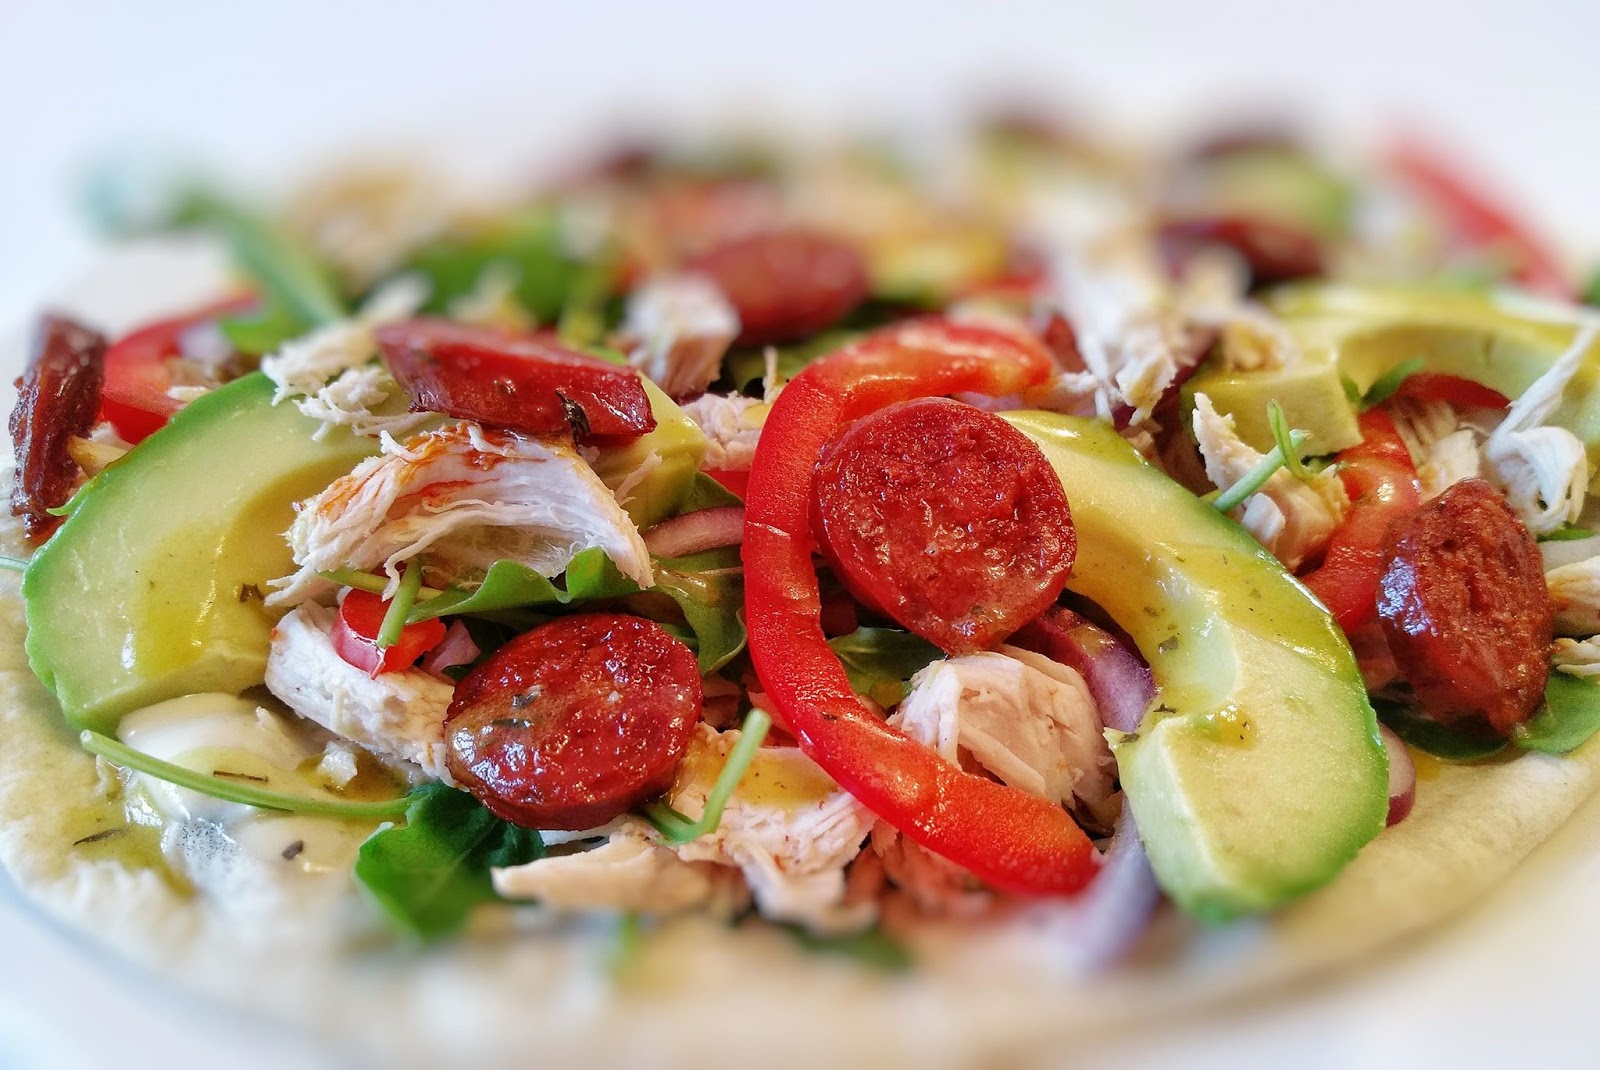 Featured Image of Turkish Style Tuna & Halloumi Salad with Herby Salsa